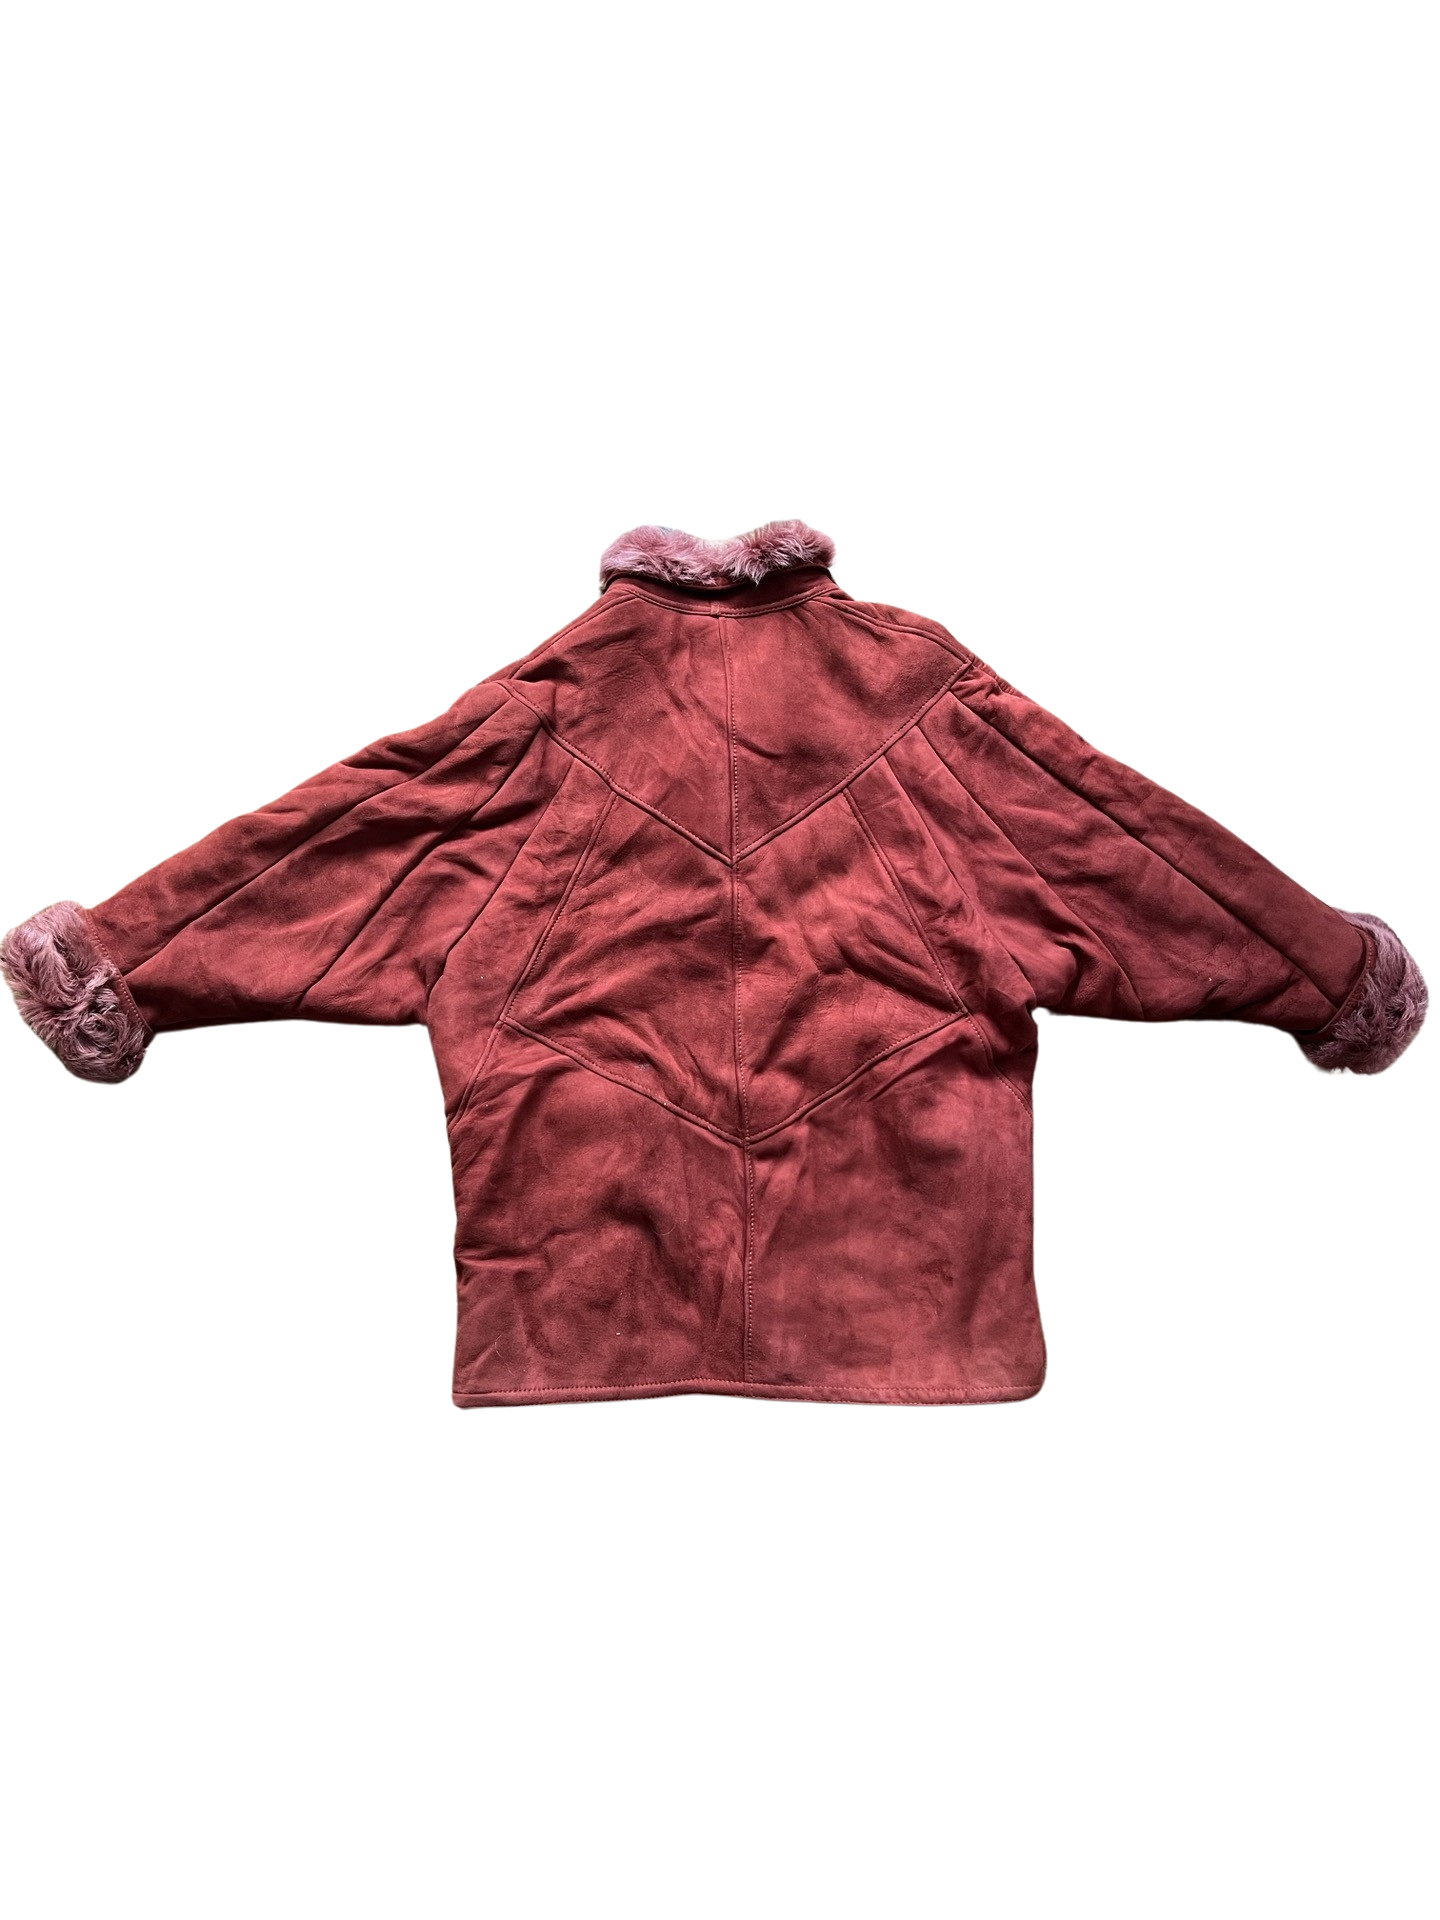 Red Shearling Coat